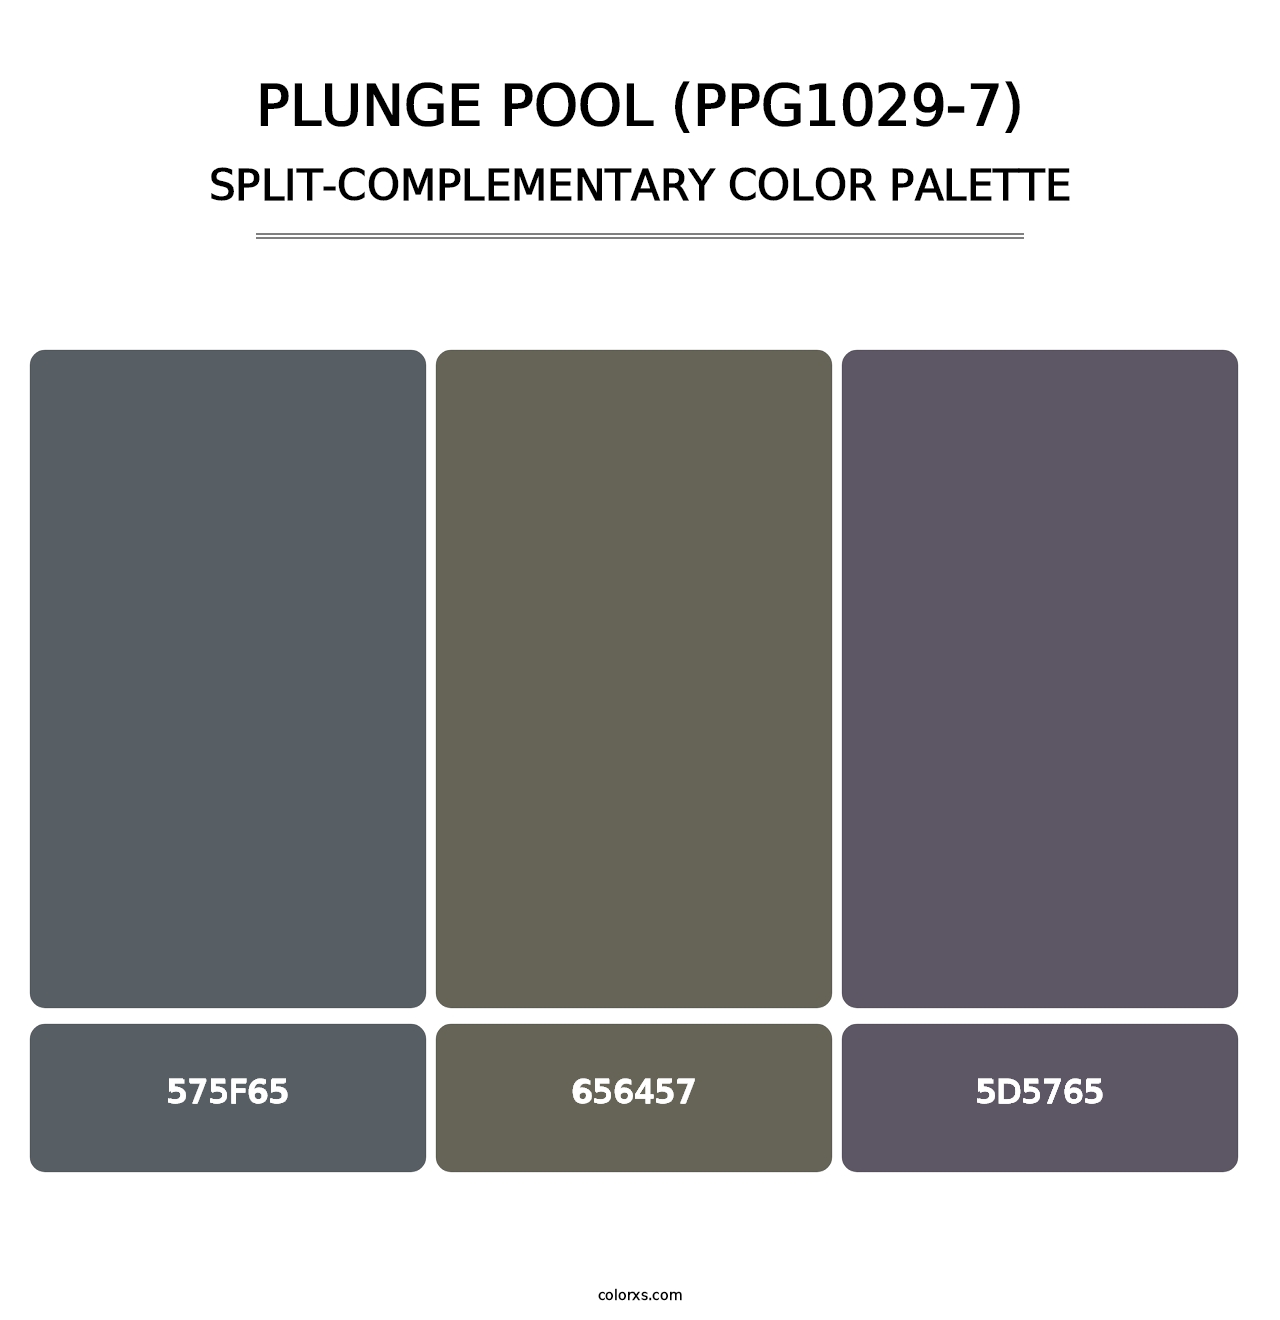 Plunge Pool (PPG1029-7) - Split-Complementary Color Palette